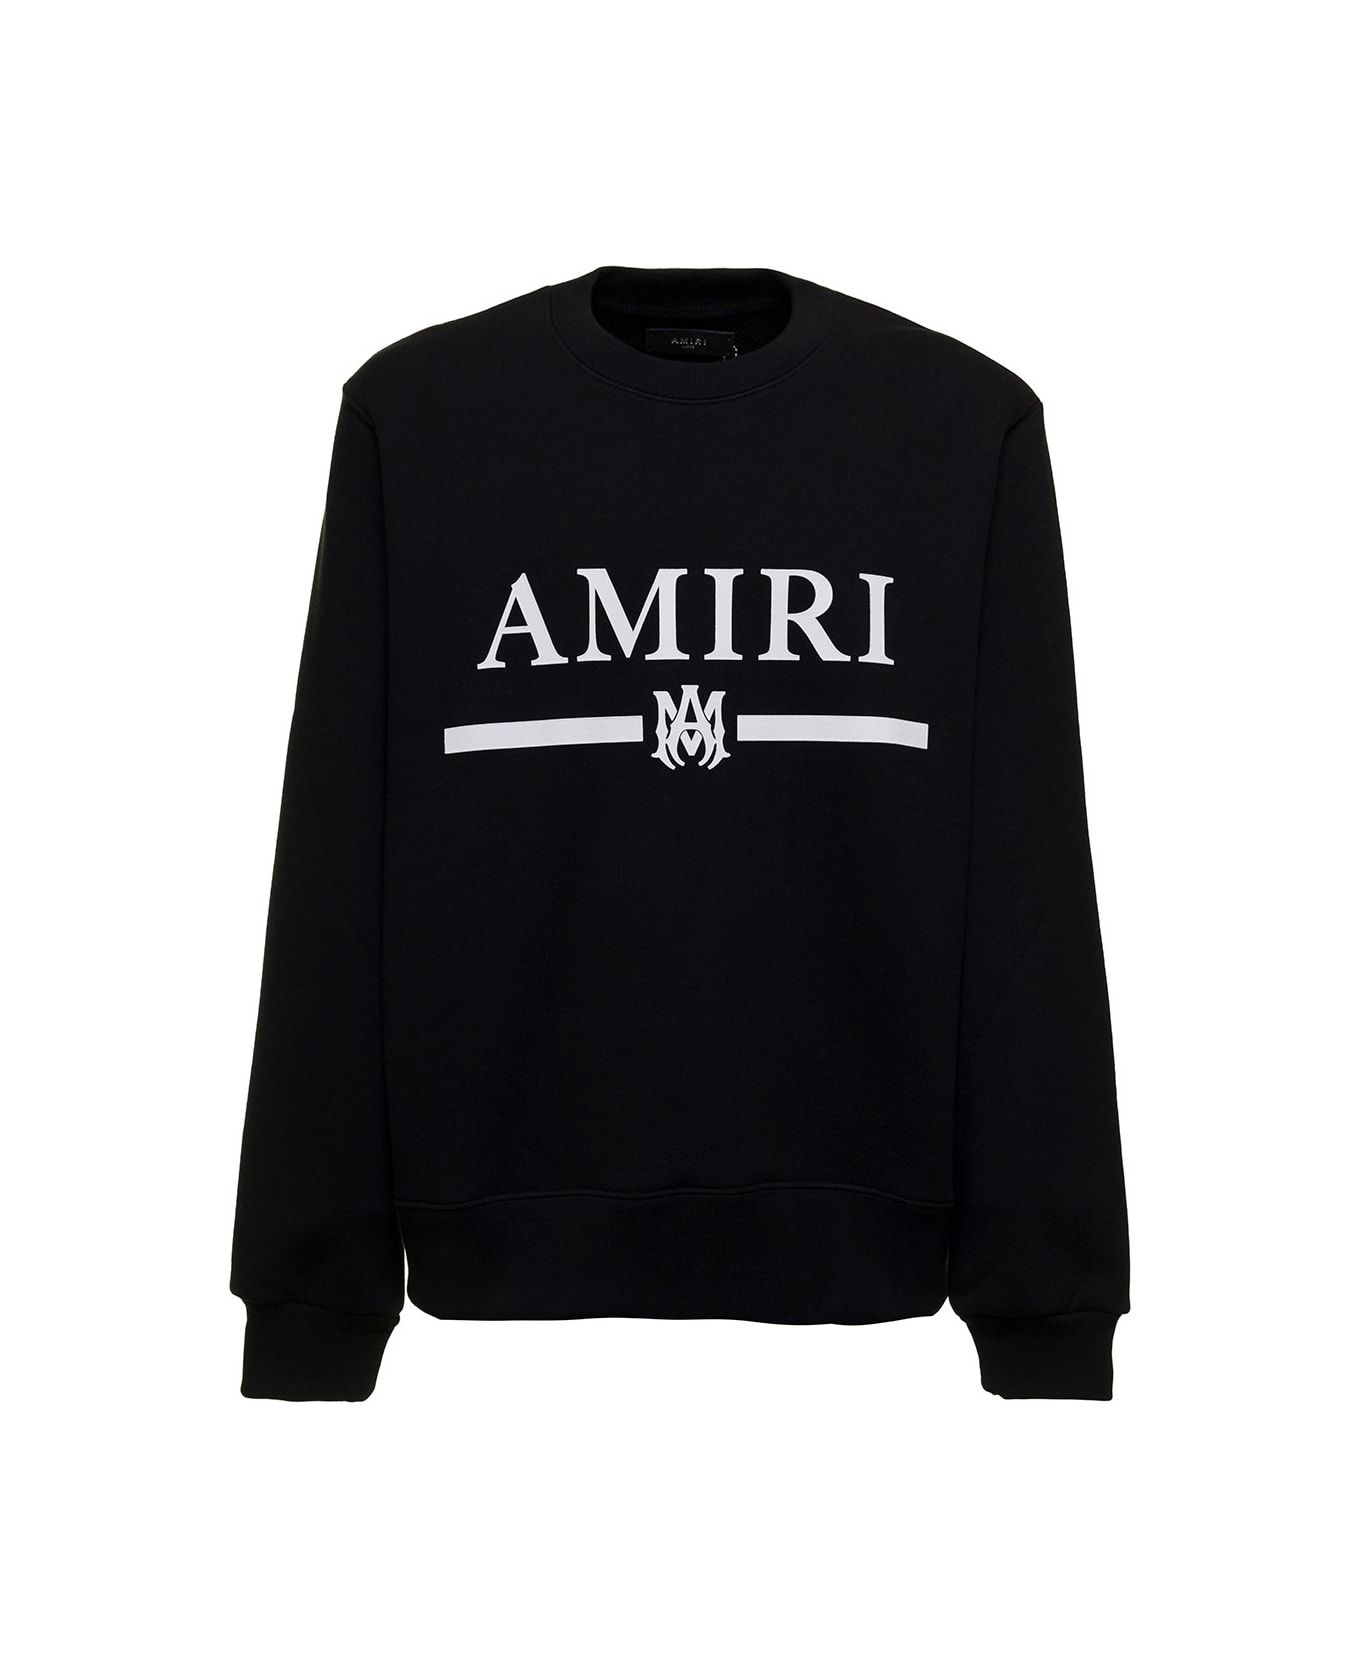 AMIRI Man's Black Cotton Kiabi T-shirts manches longues - Black